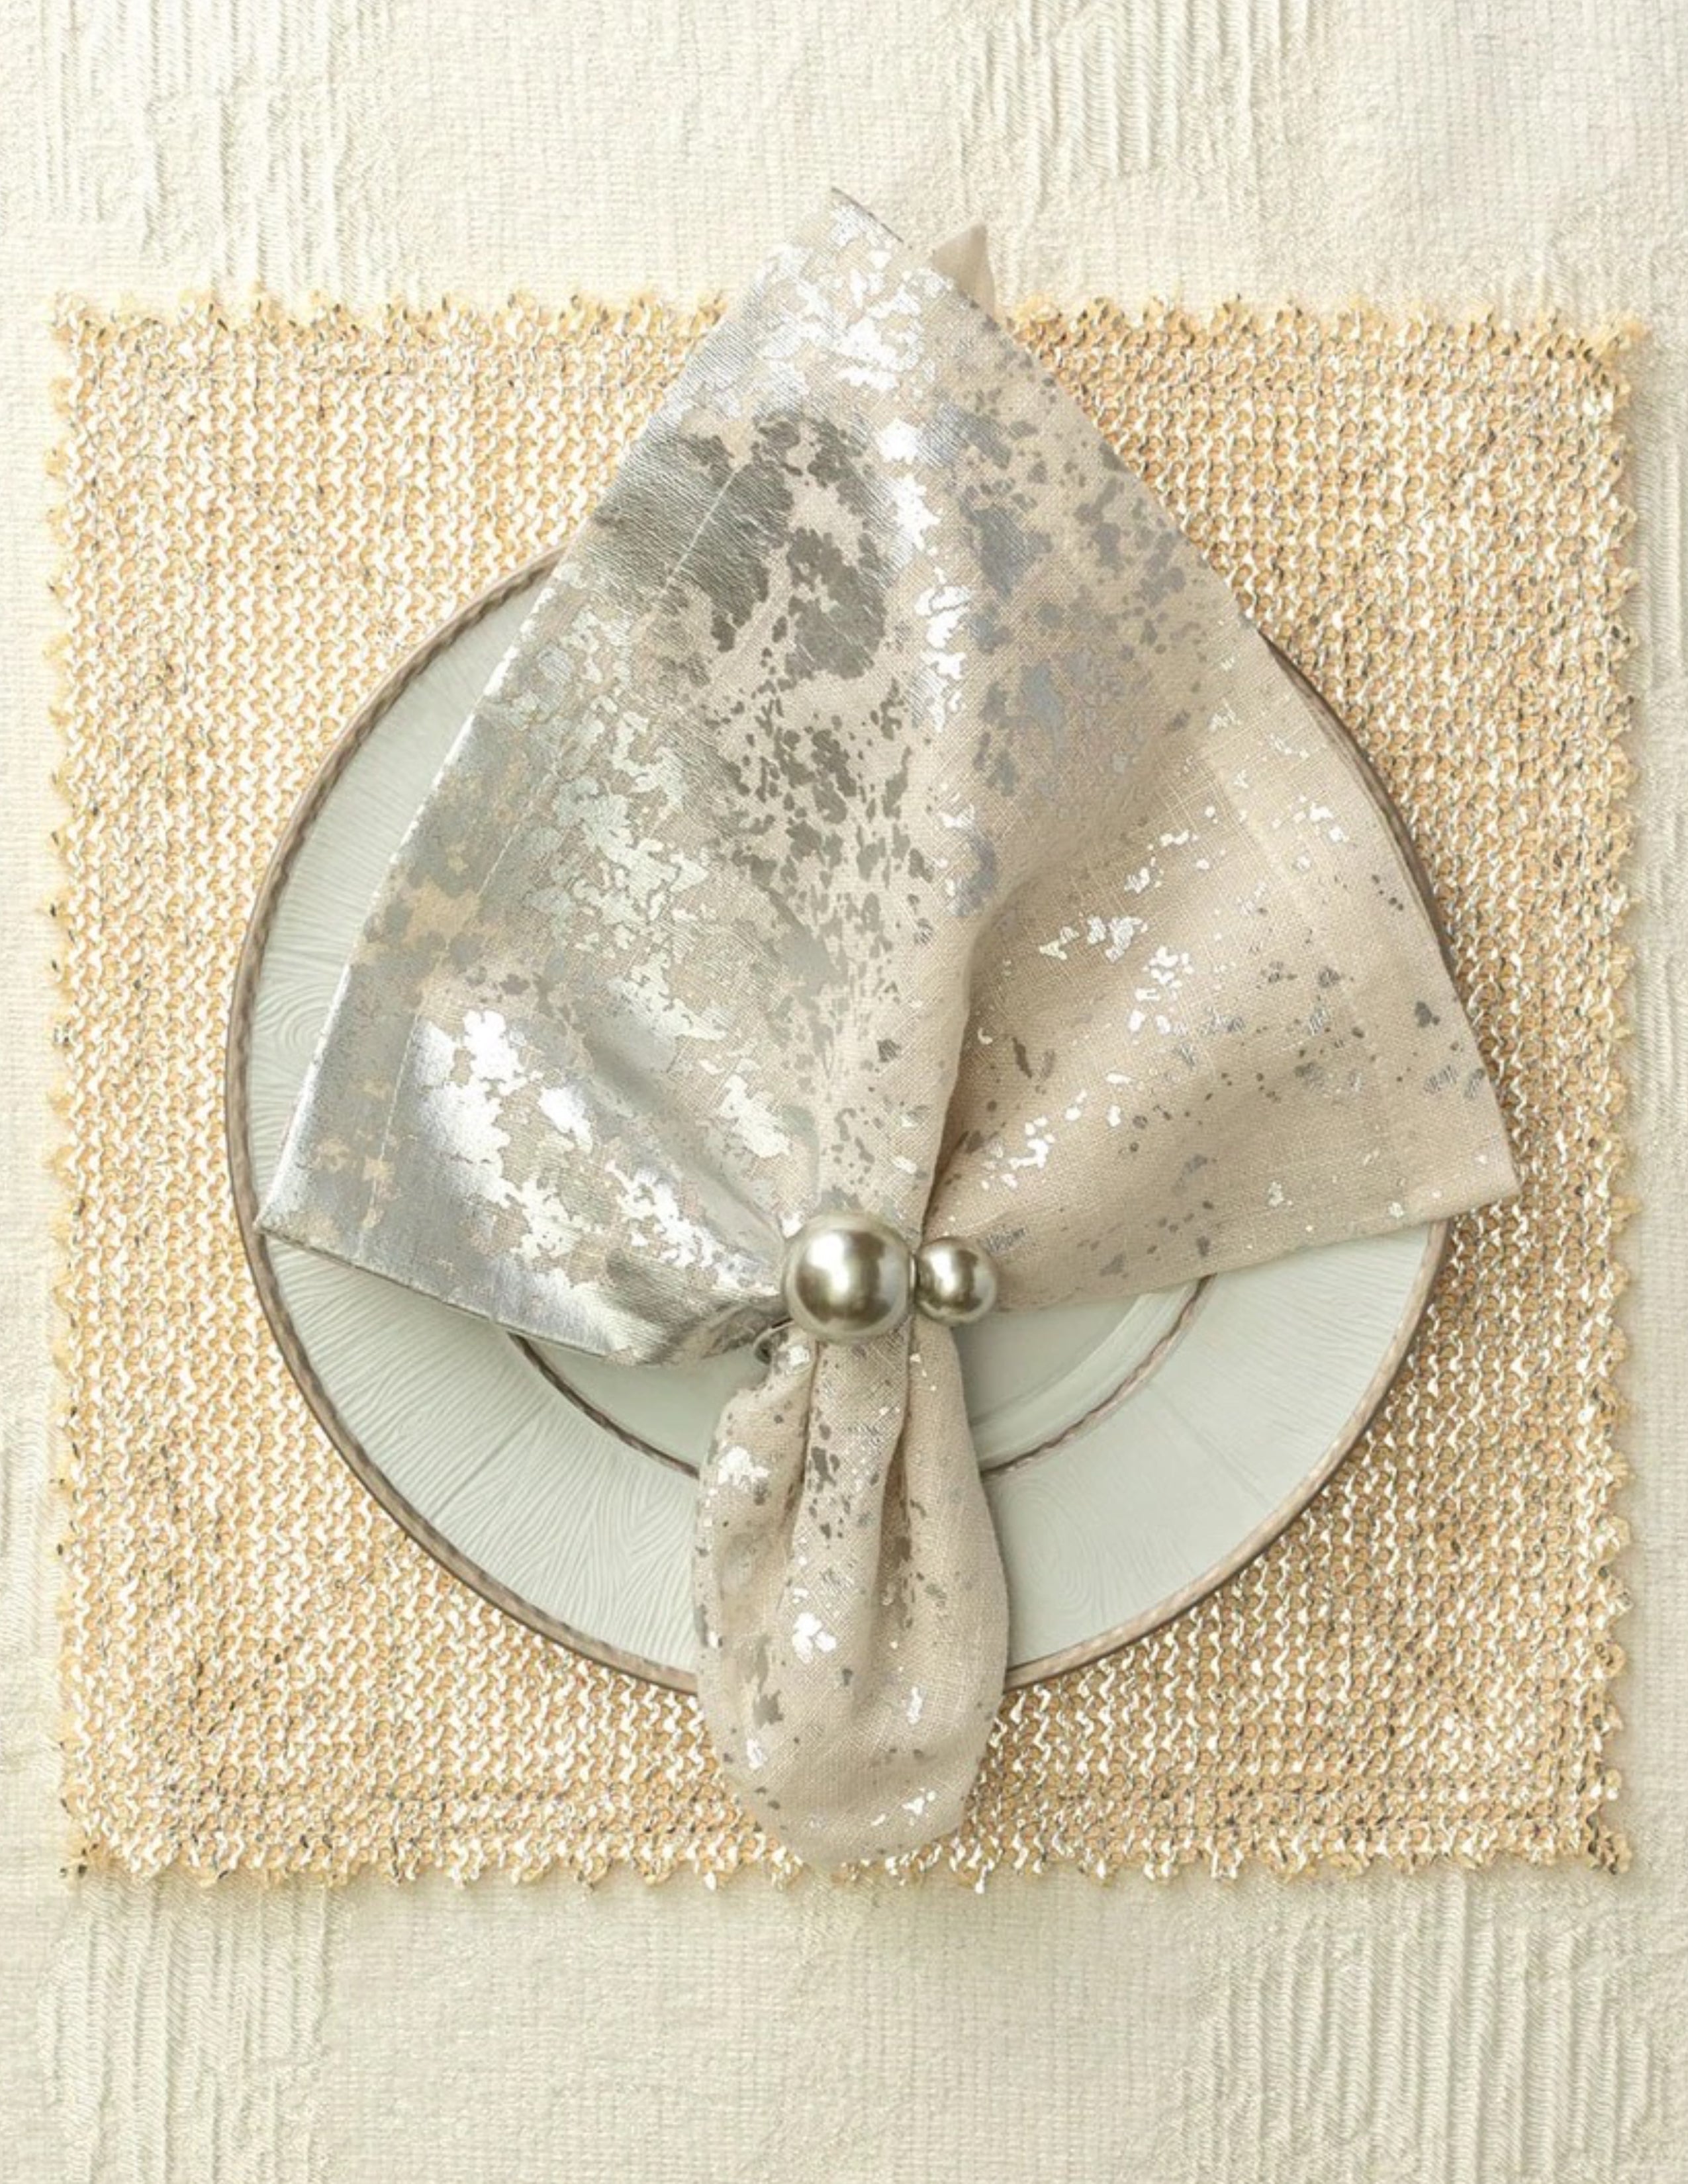 Pearl Napkin Ring Set/4 - Grey/Silver